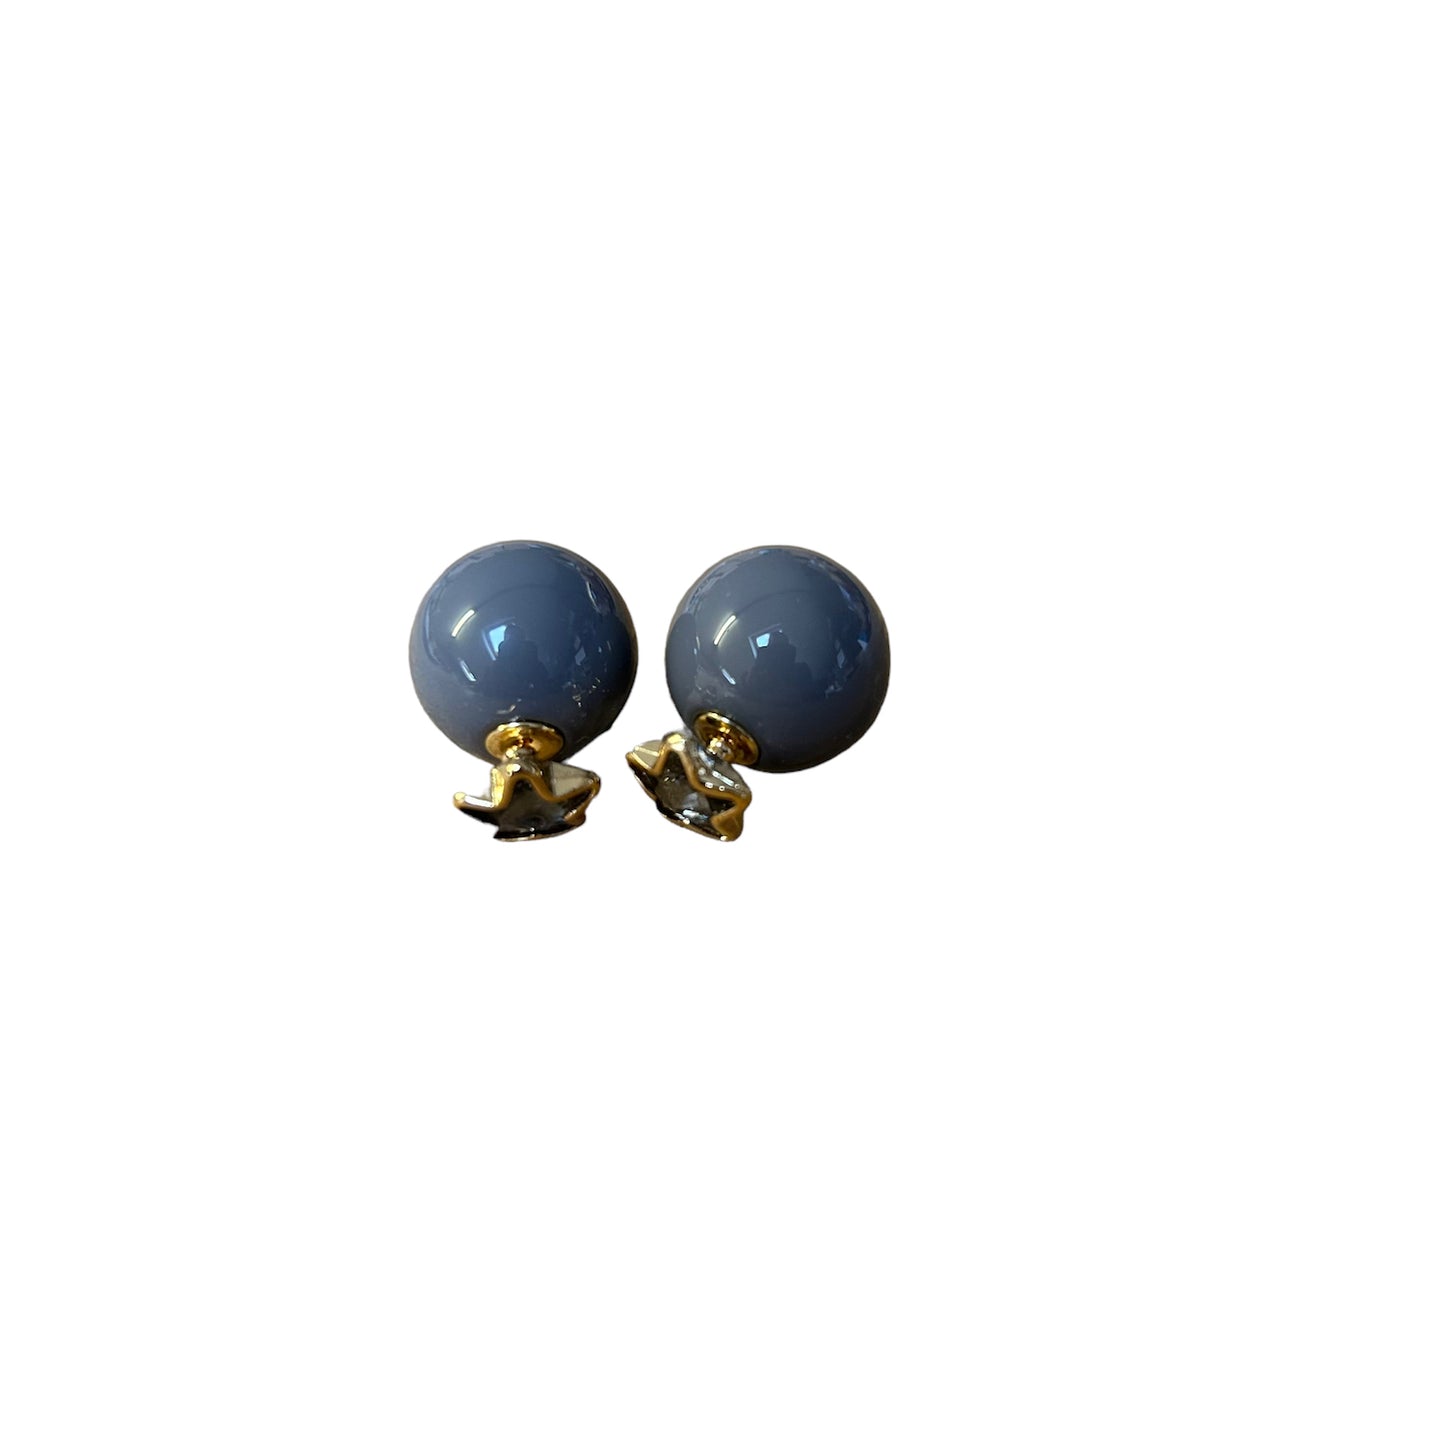 Grey star orb earrings